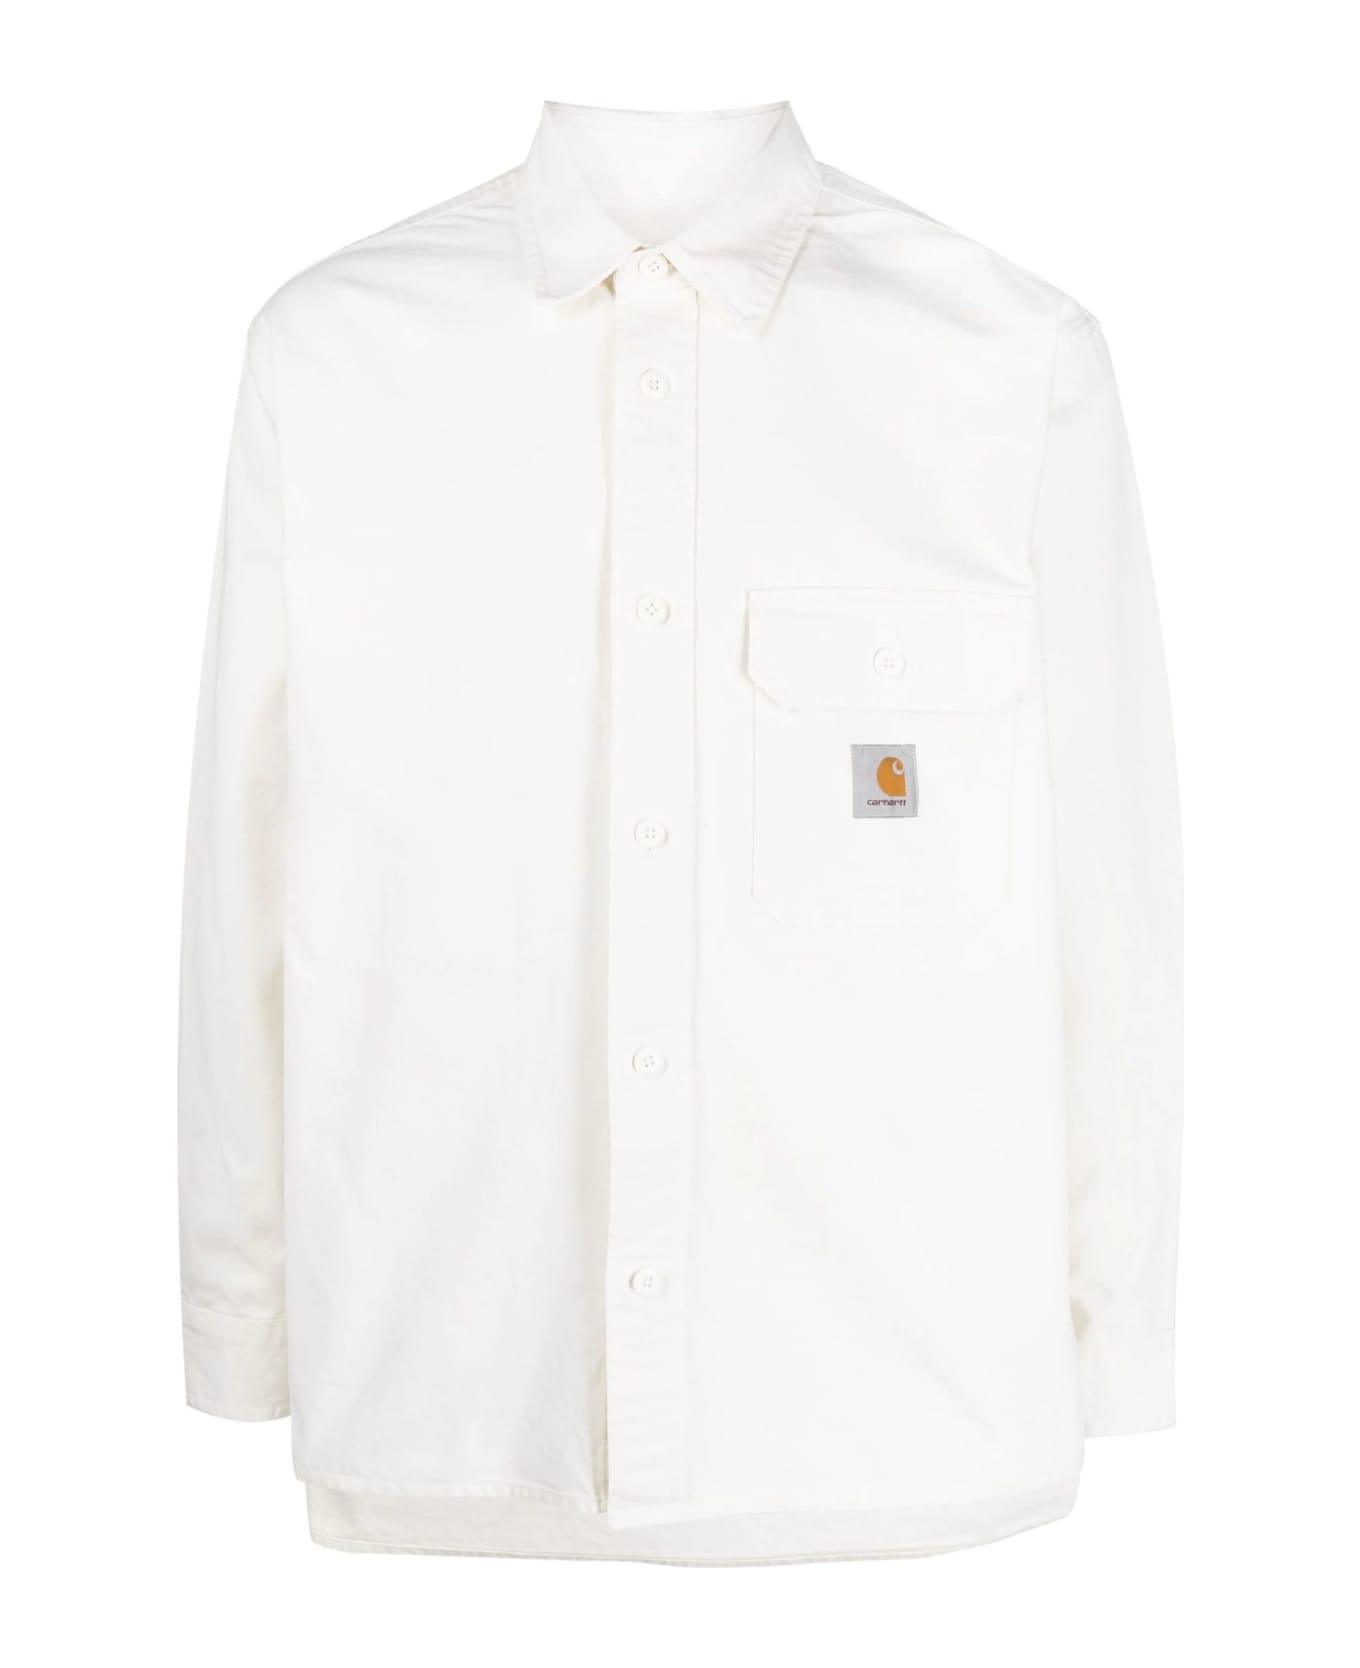 Carhartt Shirts White - White